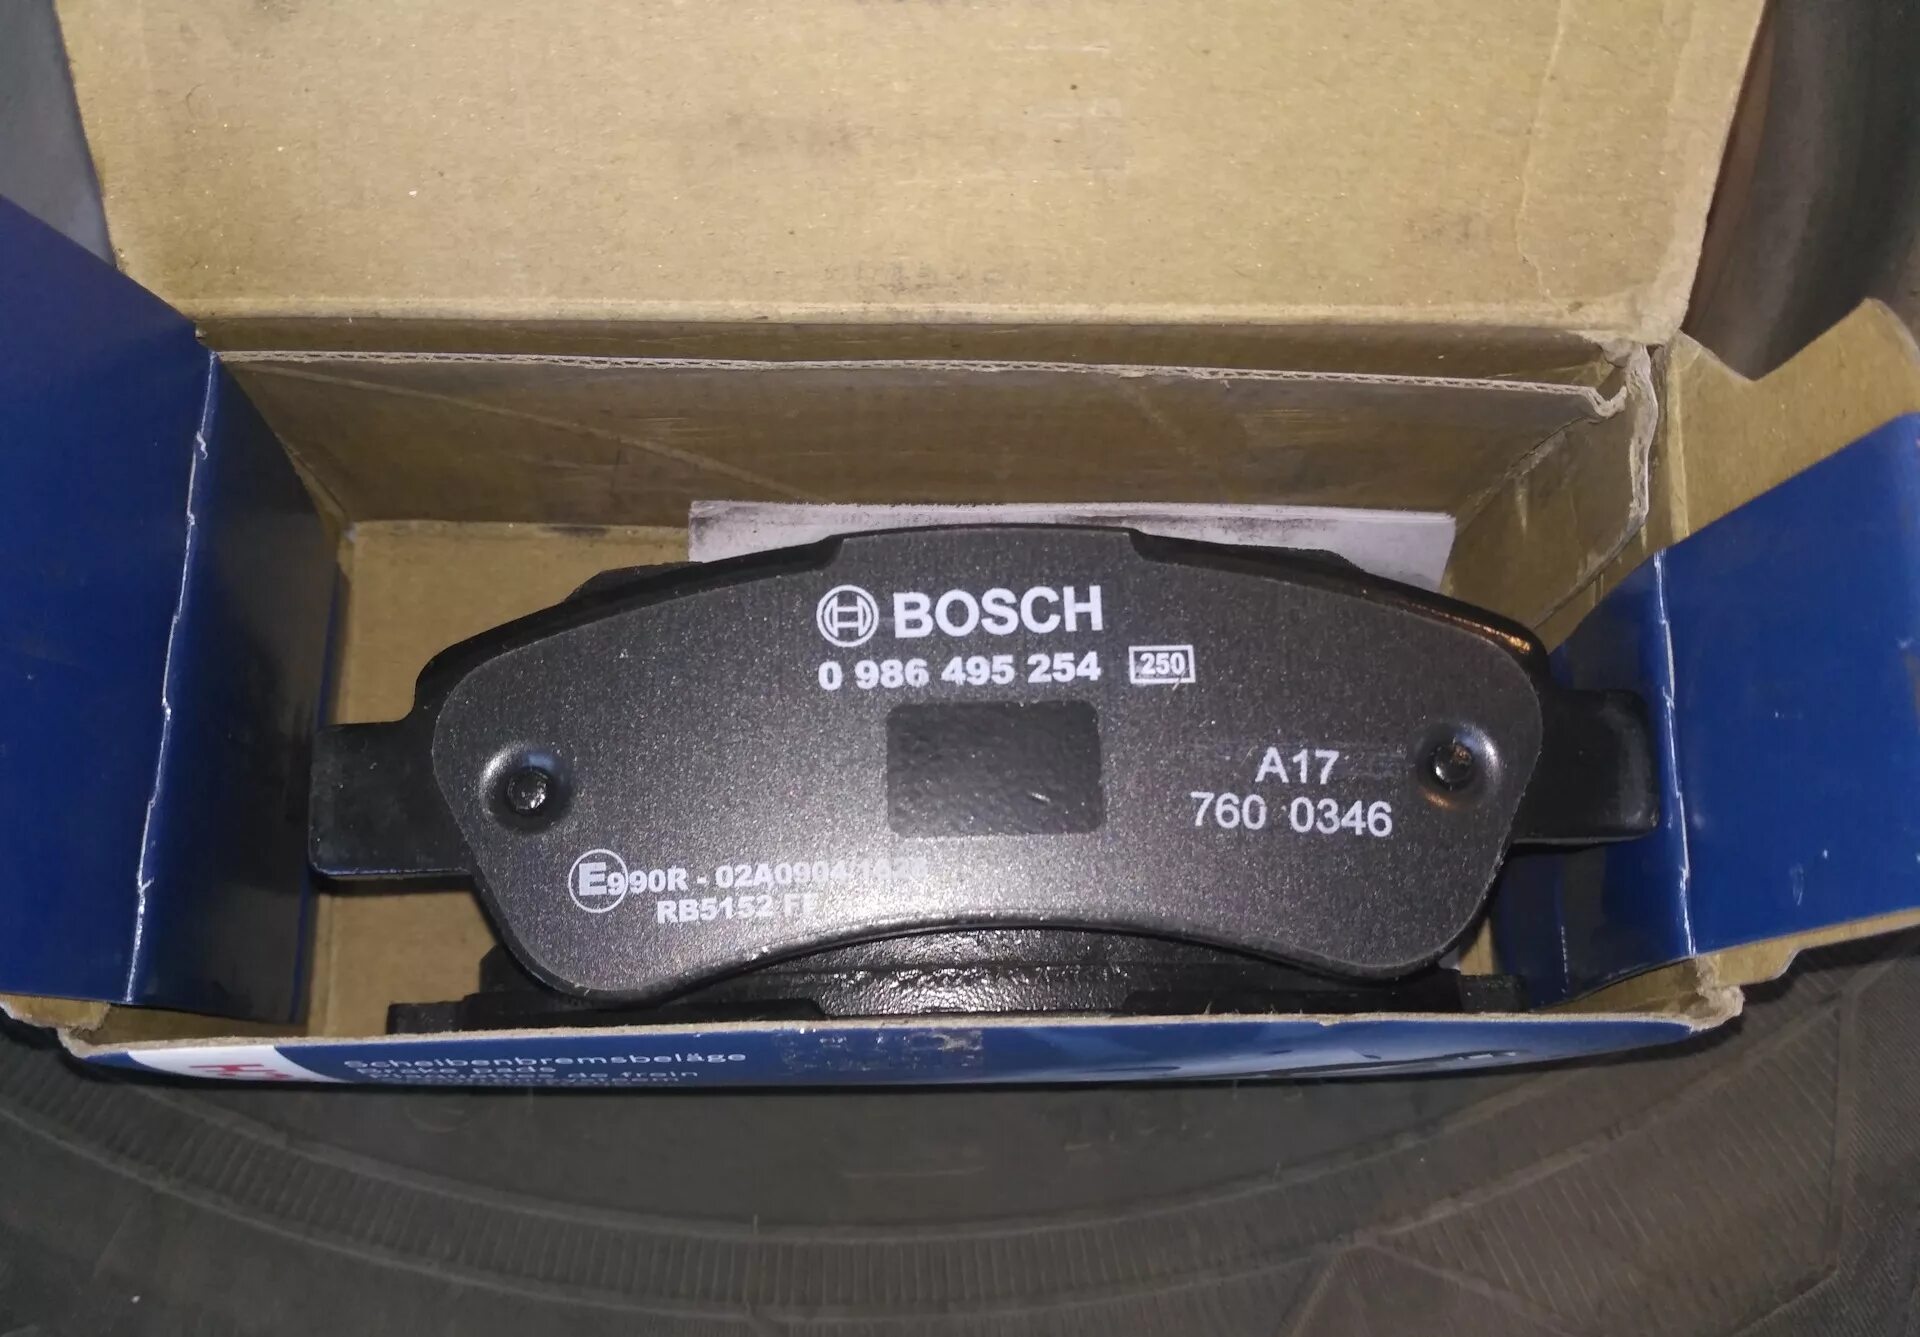 Bosch 0 986 495 106 колодки тормозные. Bosch0 986 495 089. Колодки тормозные 0 986 495 422 Bosch. Колодки тормозные 986495089 Bosch.